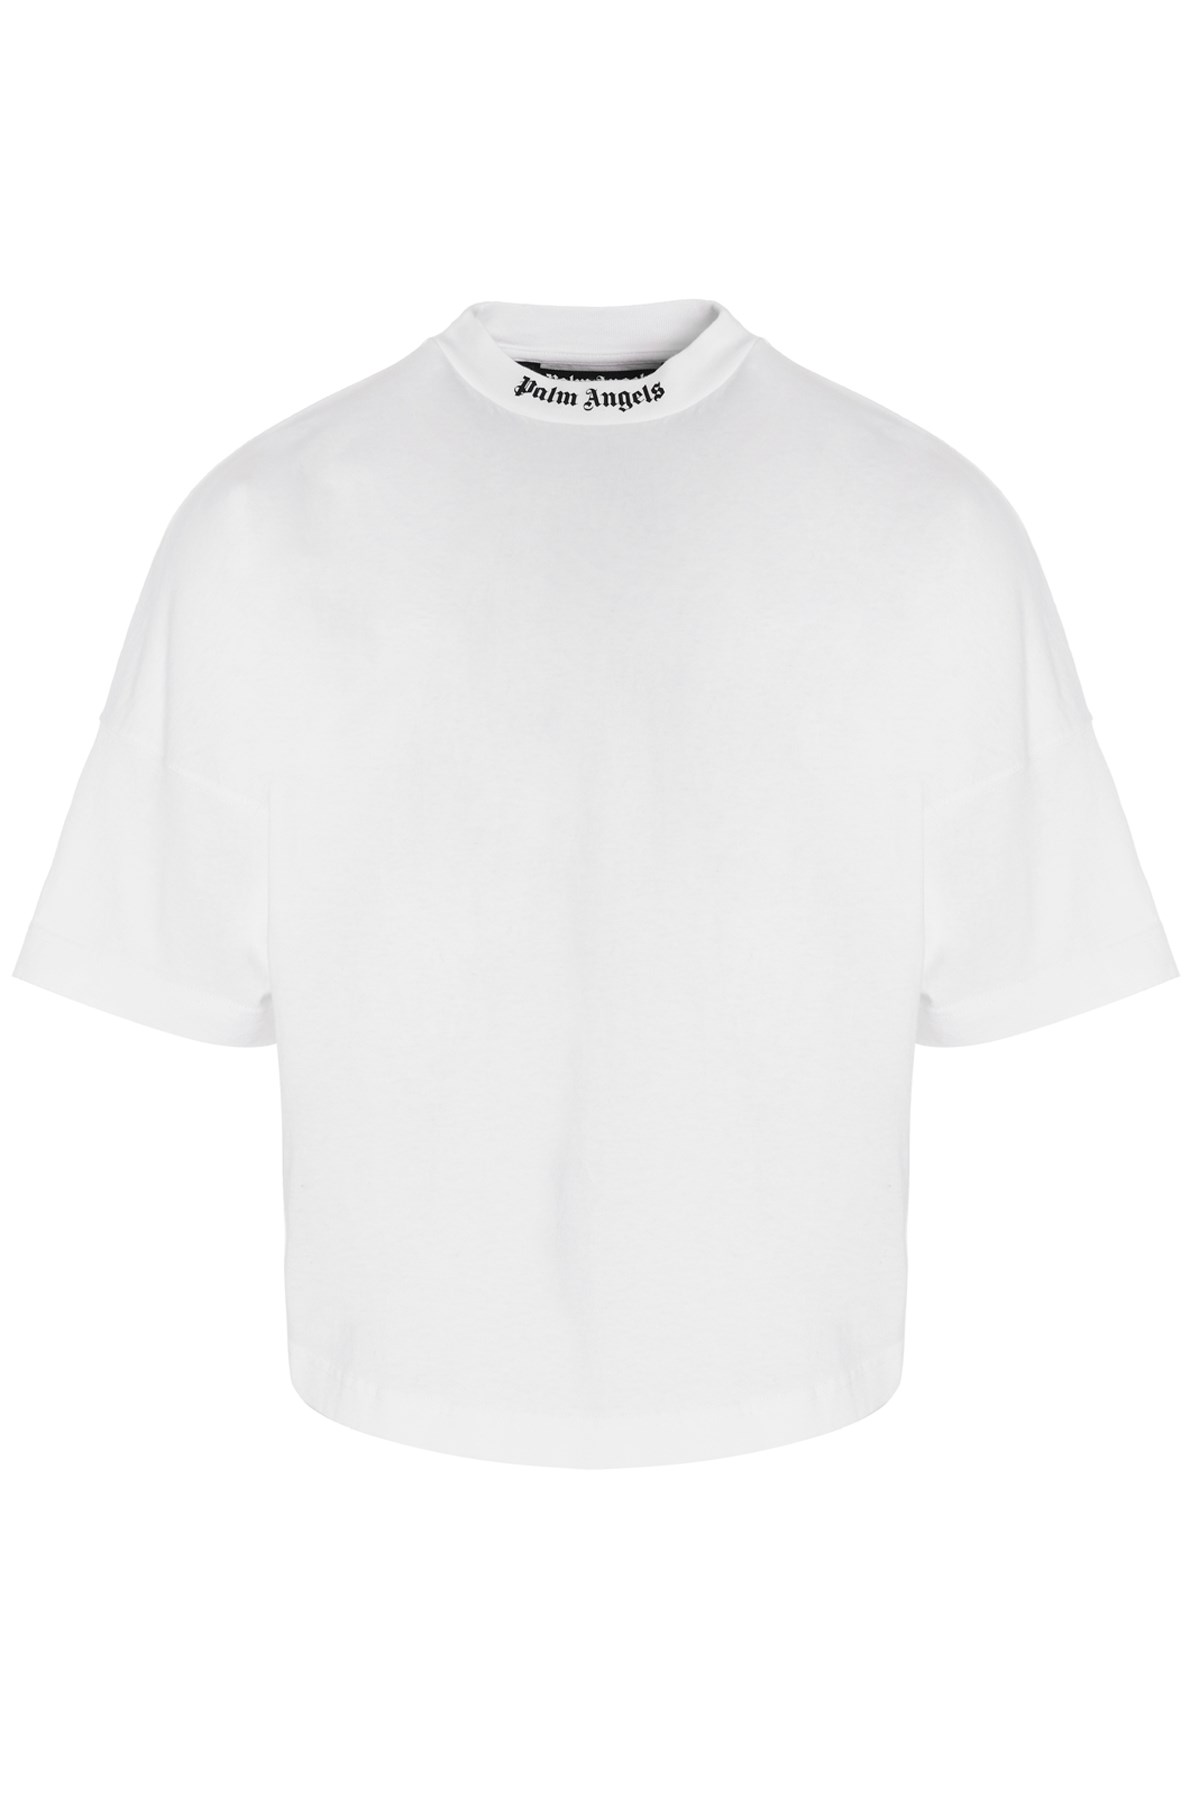 PALM ANGELS ‘Classic Over Logo’ T-Shirt